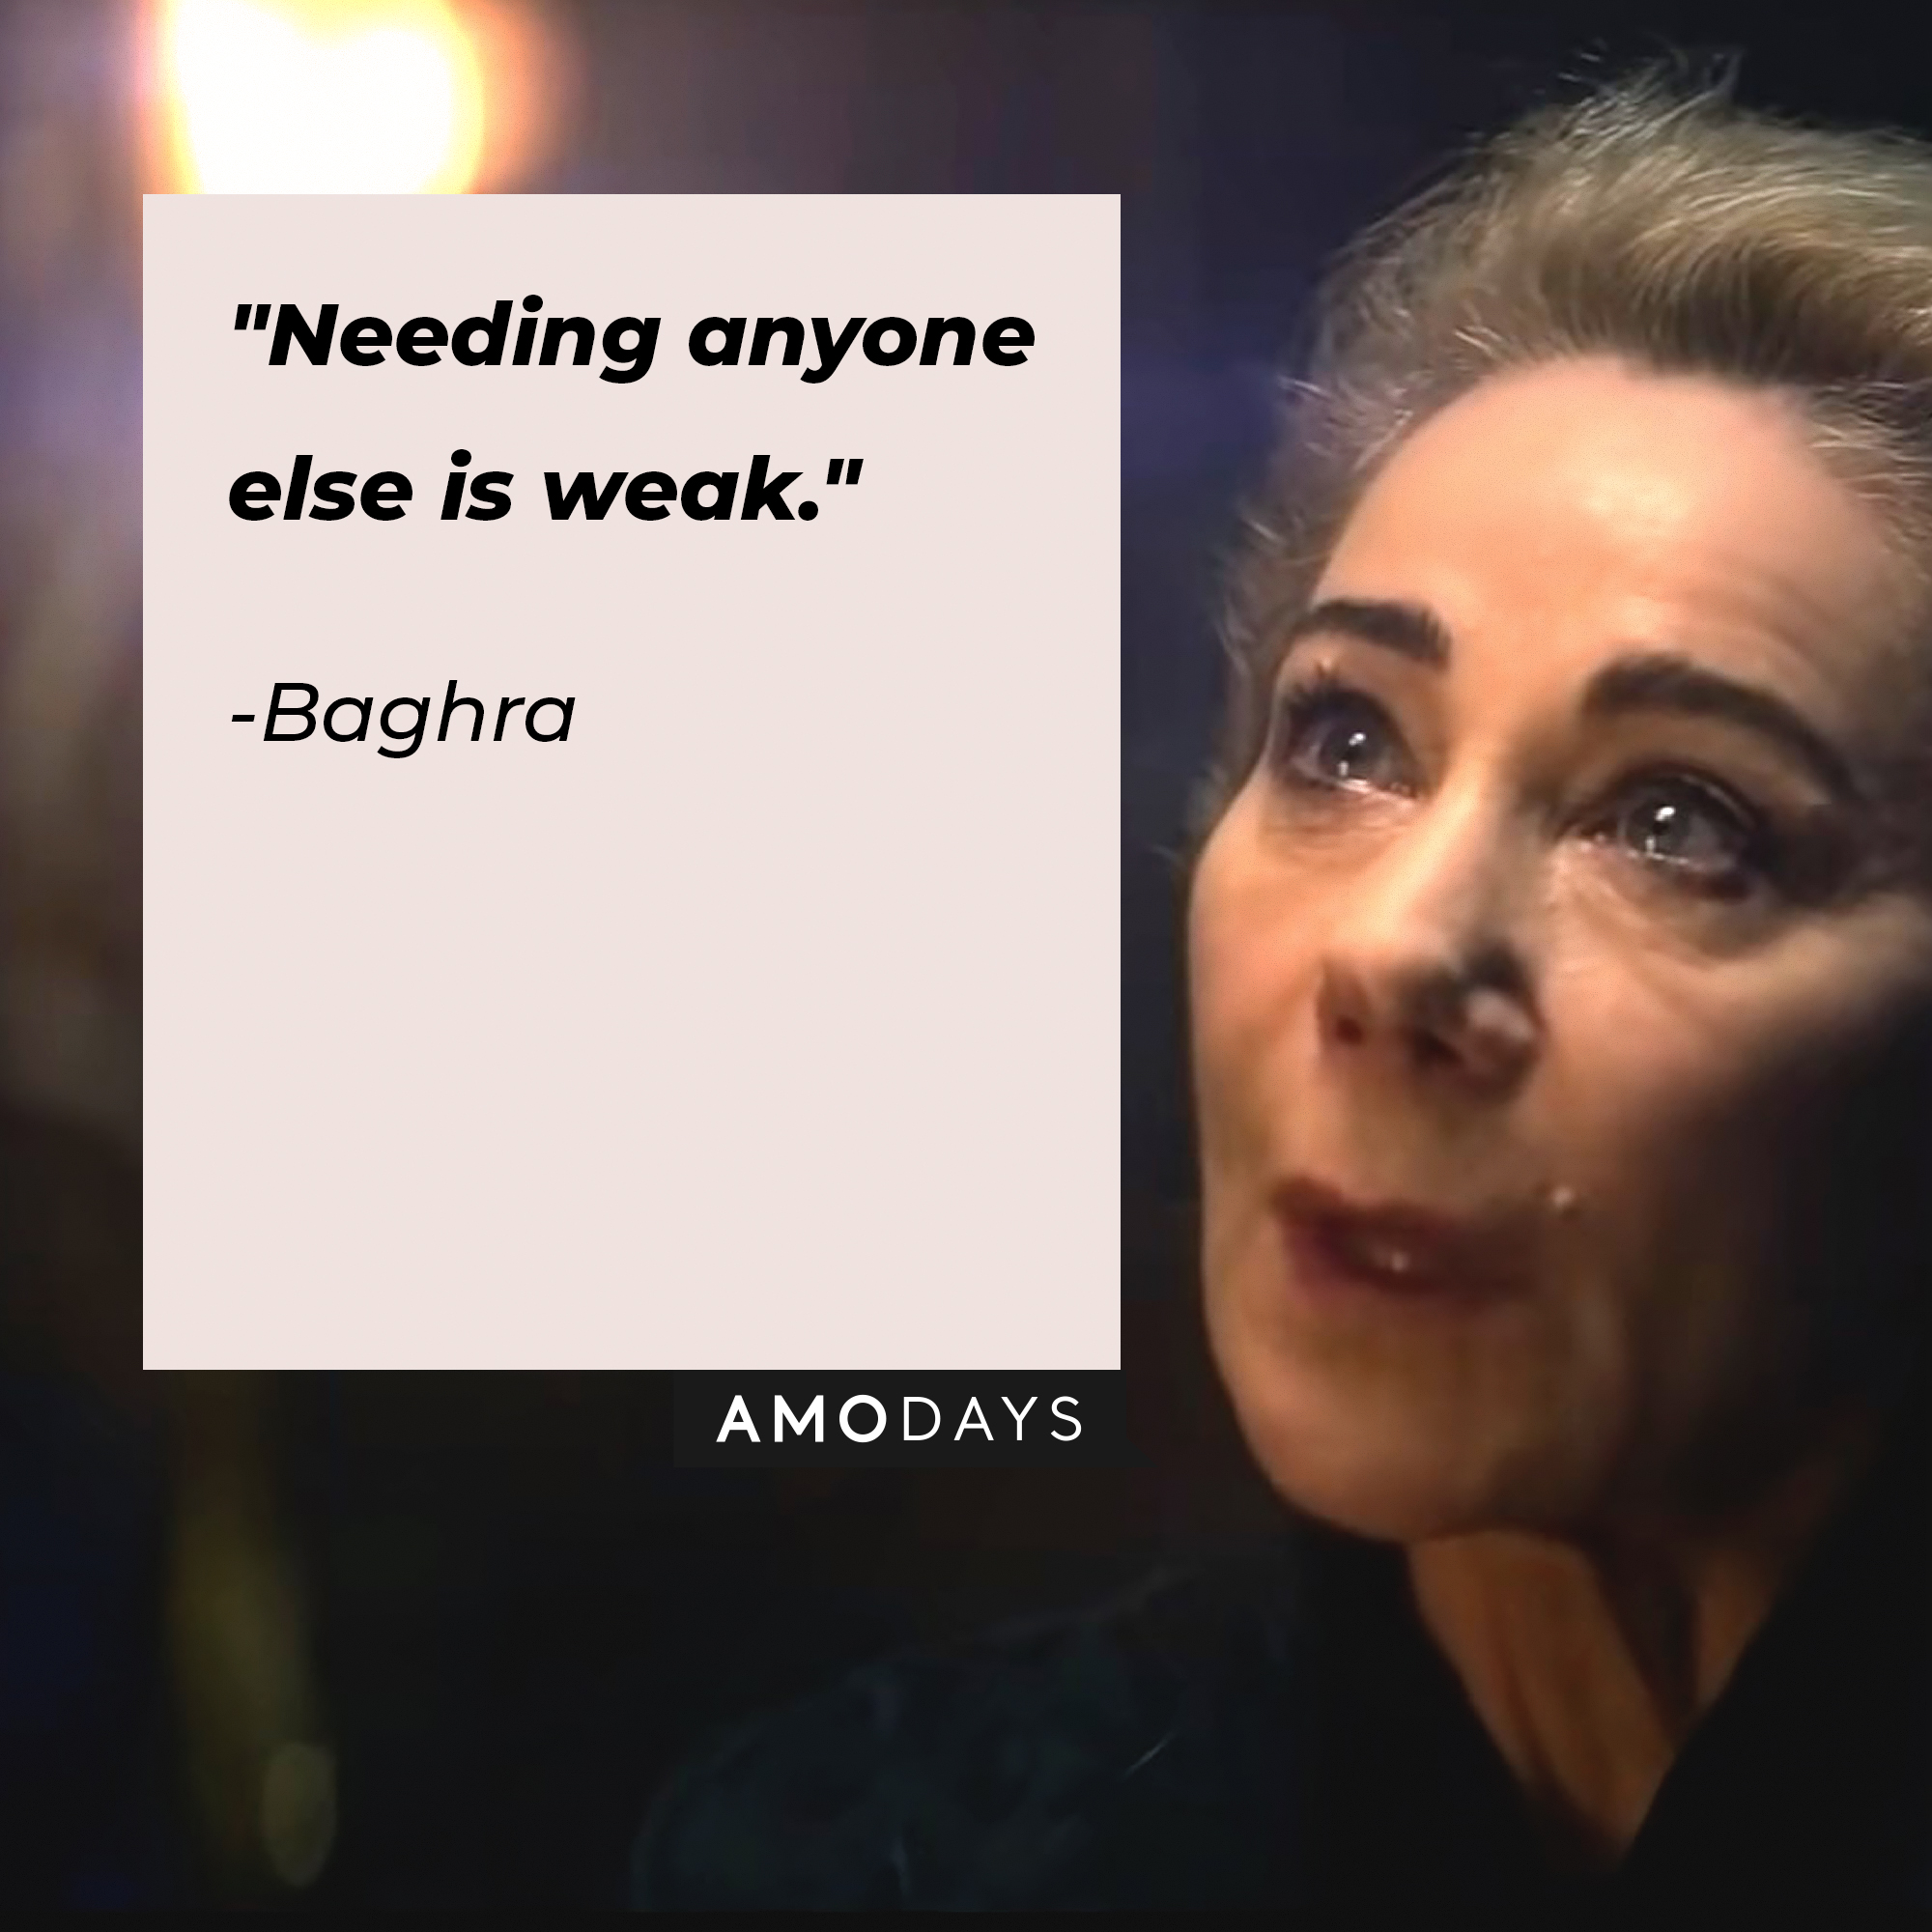 Baghra's quote: "Needing anyone else is weak." | Image: AmoDay